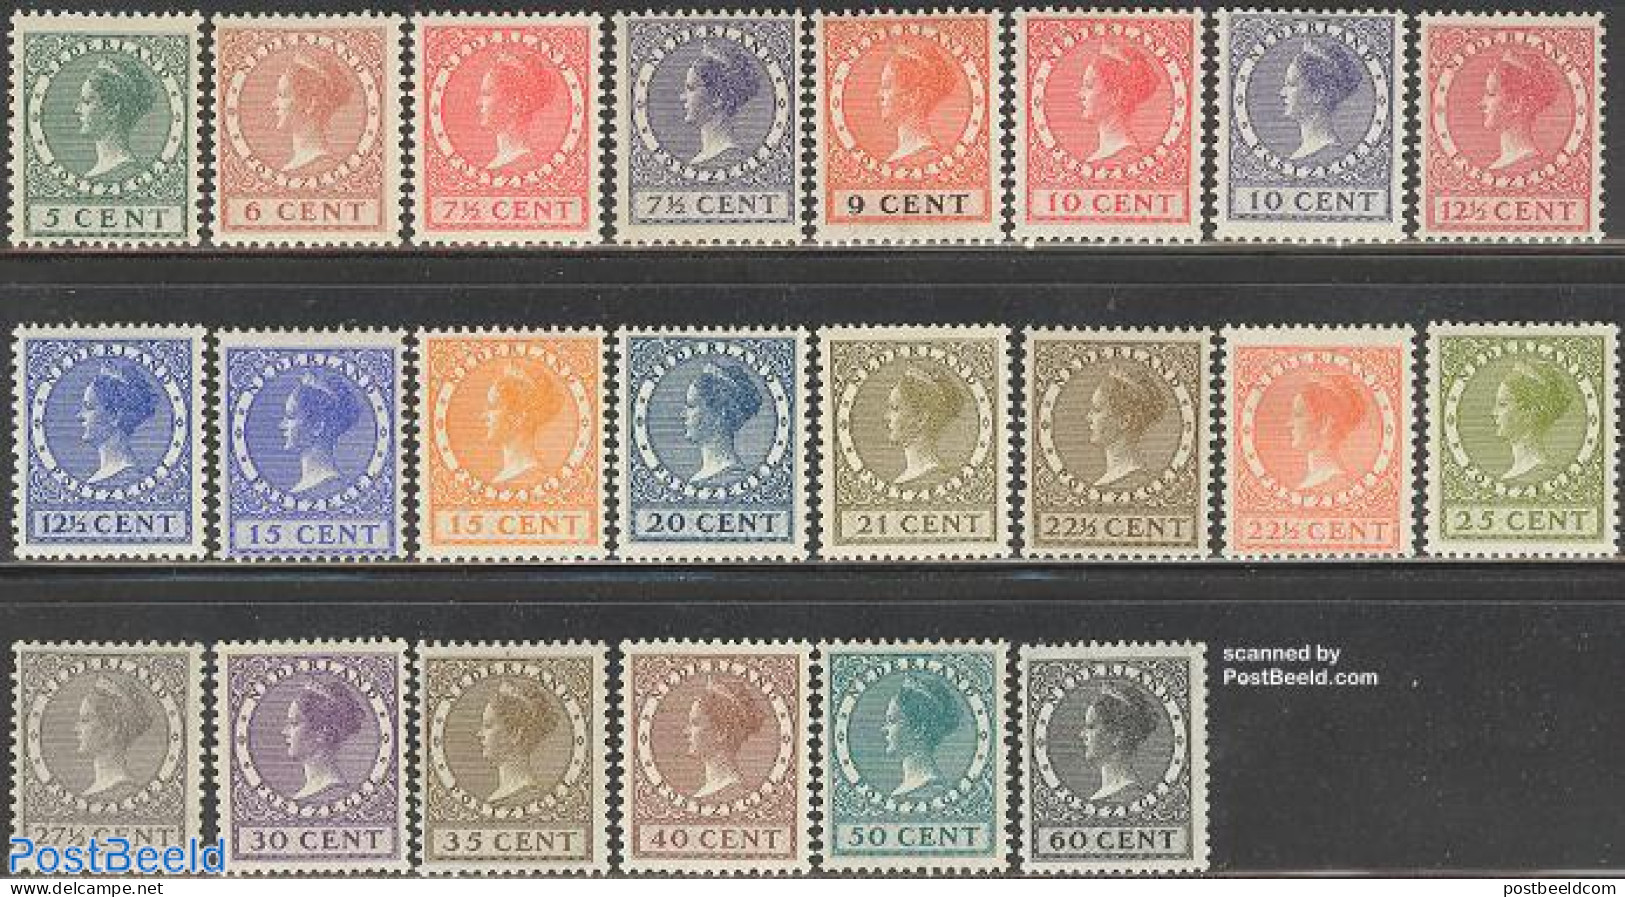 Netherlands 1926 Definitives With WM 22v, Unused (hinged) - Unused Stamps